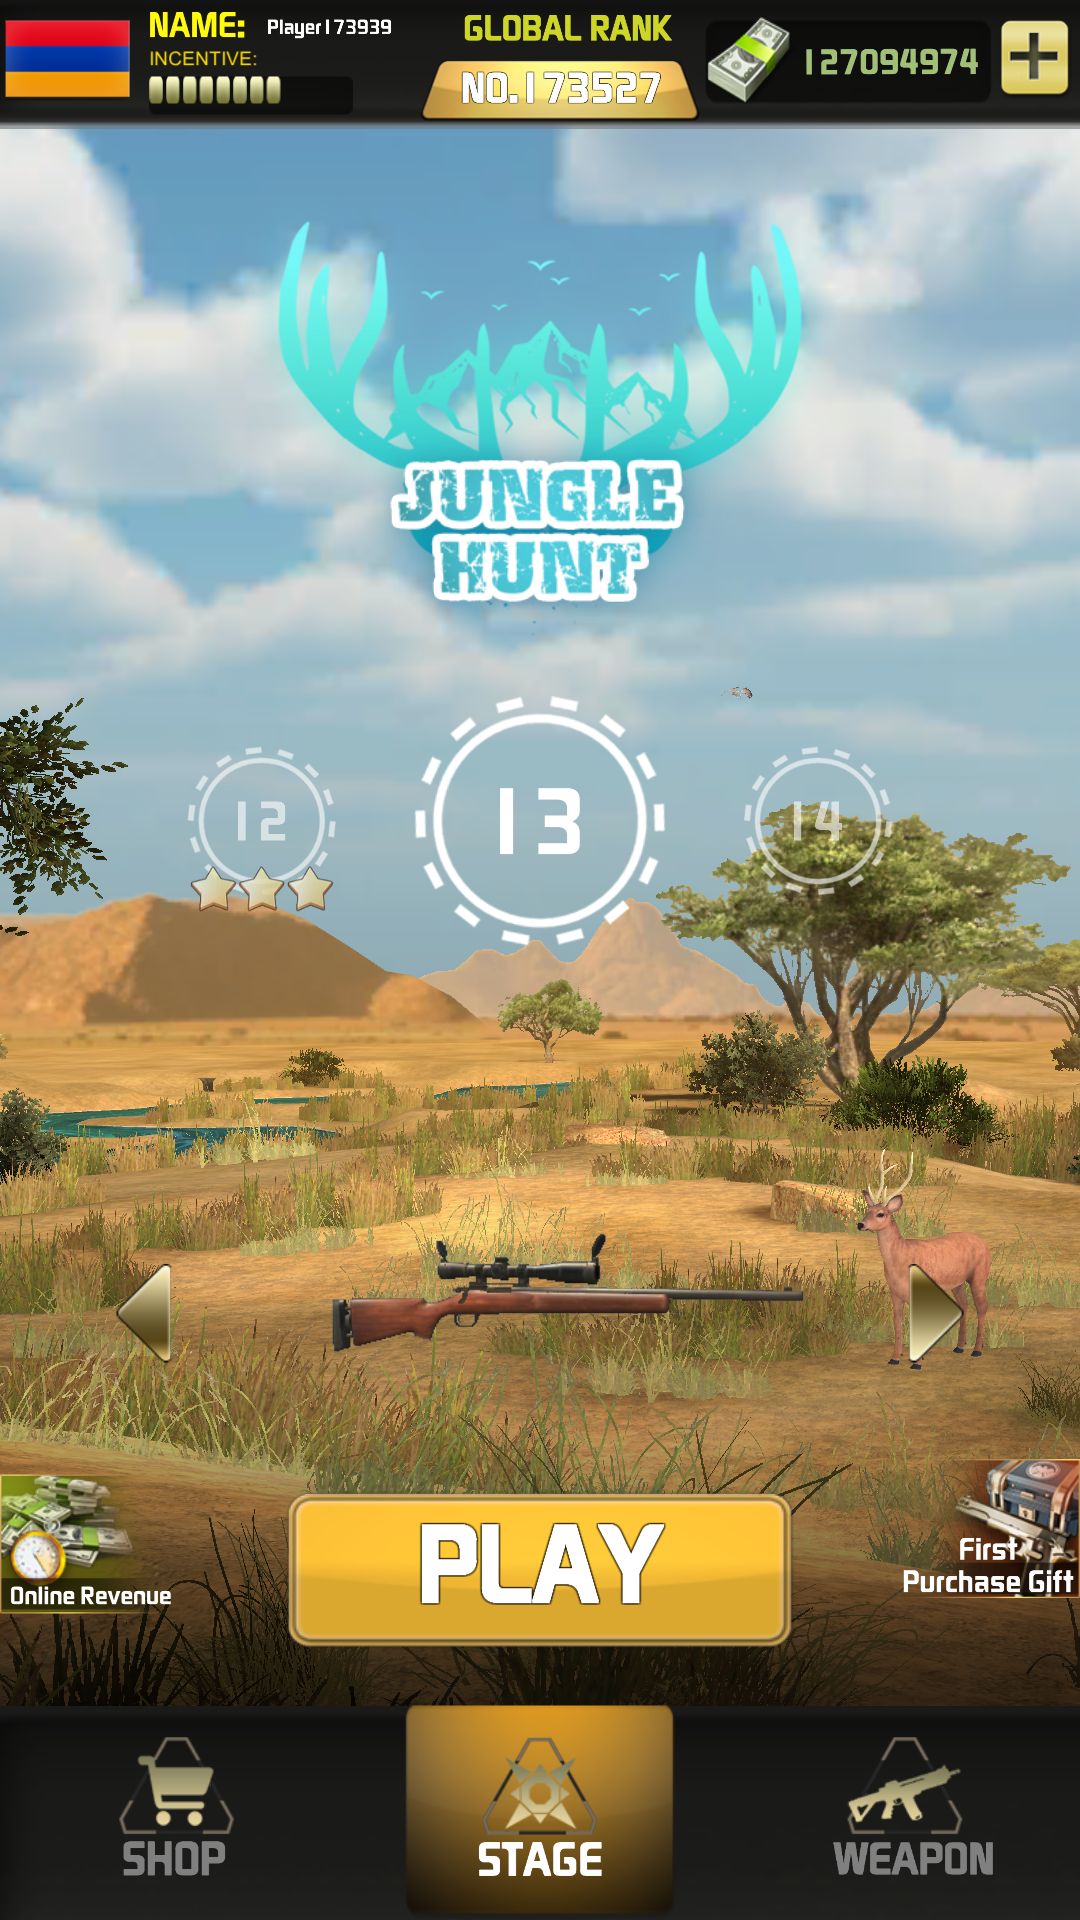 Descargar The Hunting World - 3D Wild Shooting Game gratis para Android.